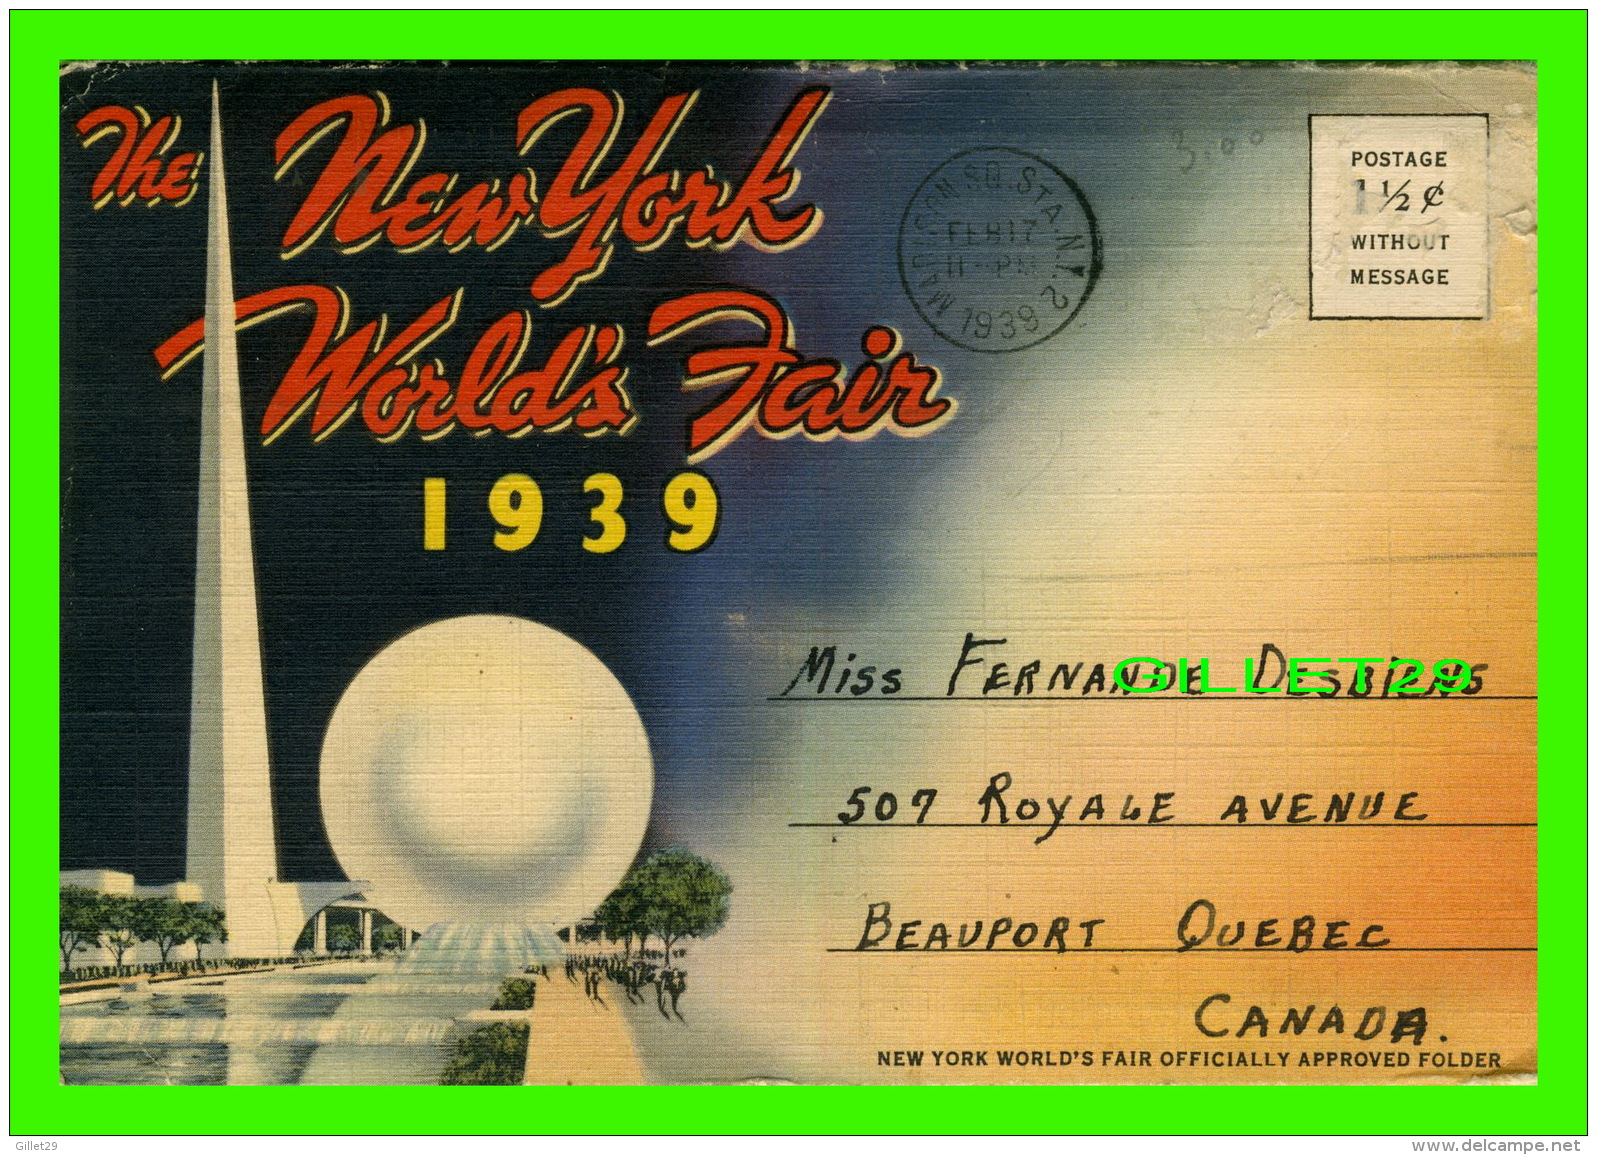 NEW YORK CITY, NY - NEW YORK WORLD'S FAIR FOLDER IN 1939 - TRAVEL IN 1939 - - Mostre, Esposizioni